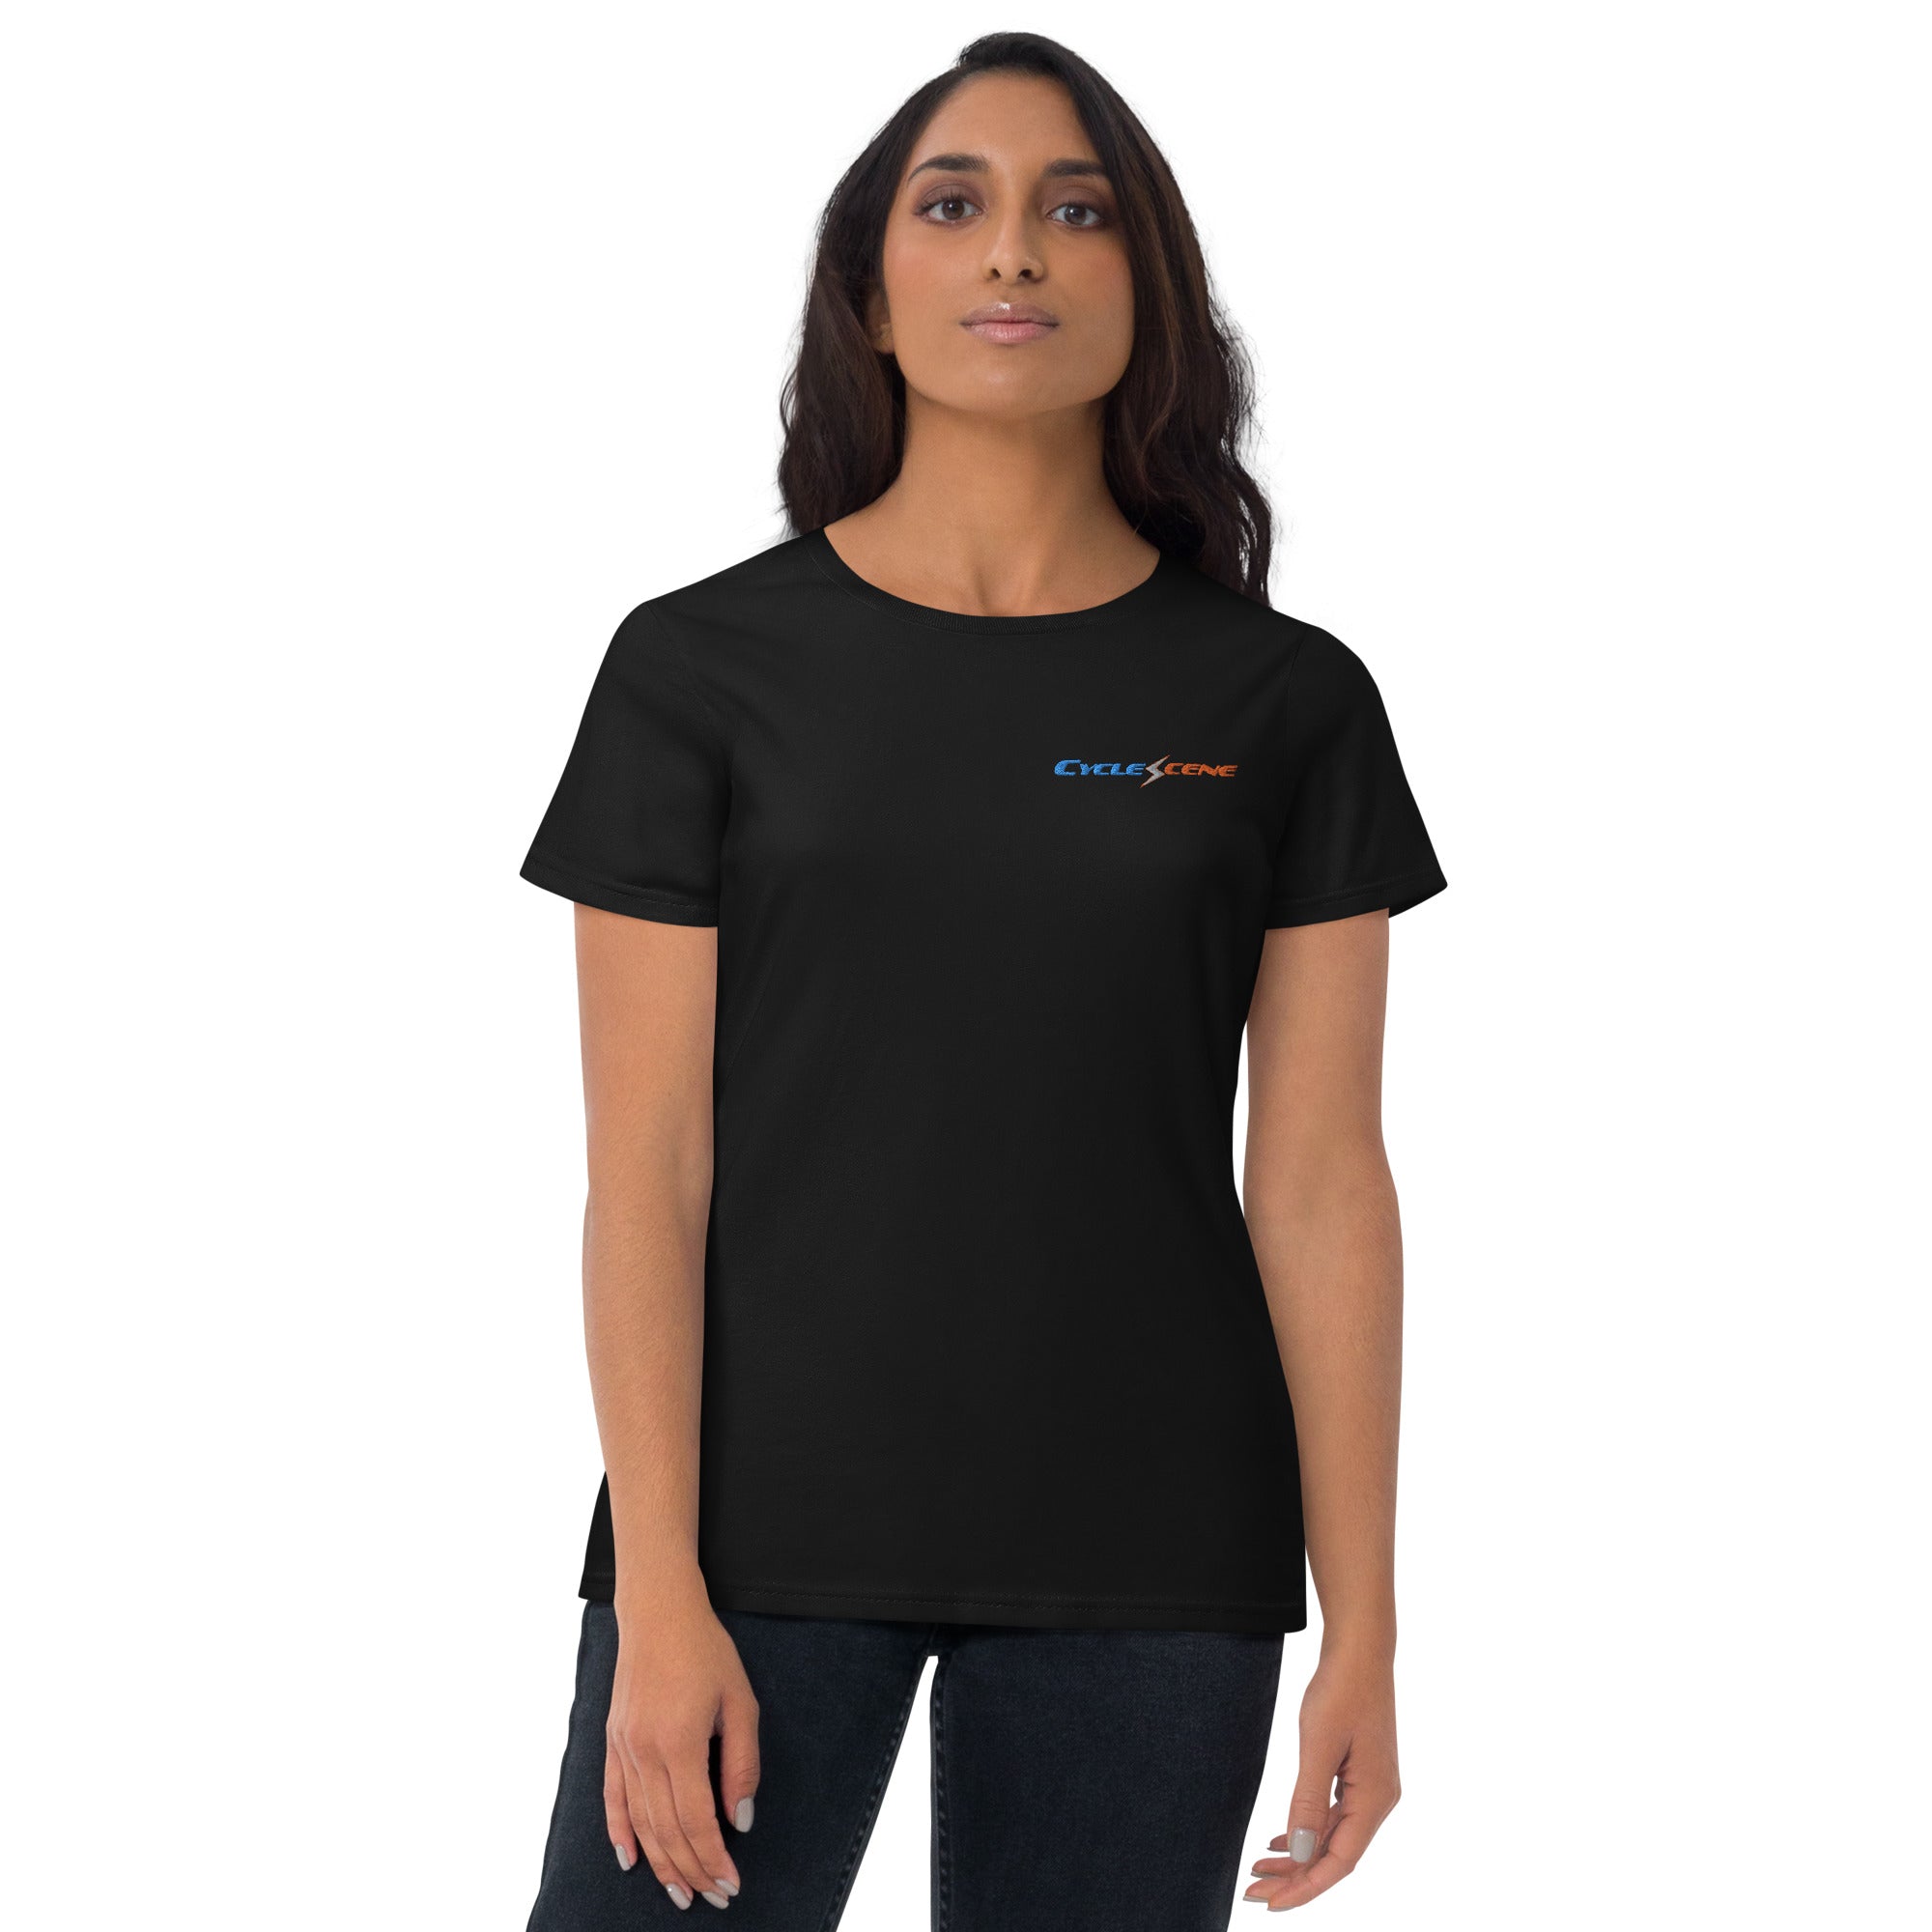 CycleScene Women's short sleeve t-shirt